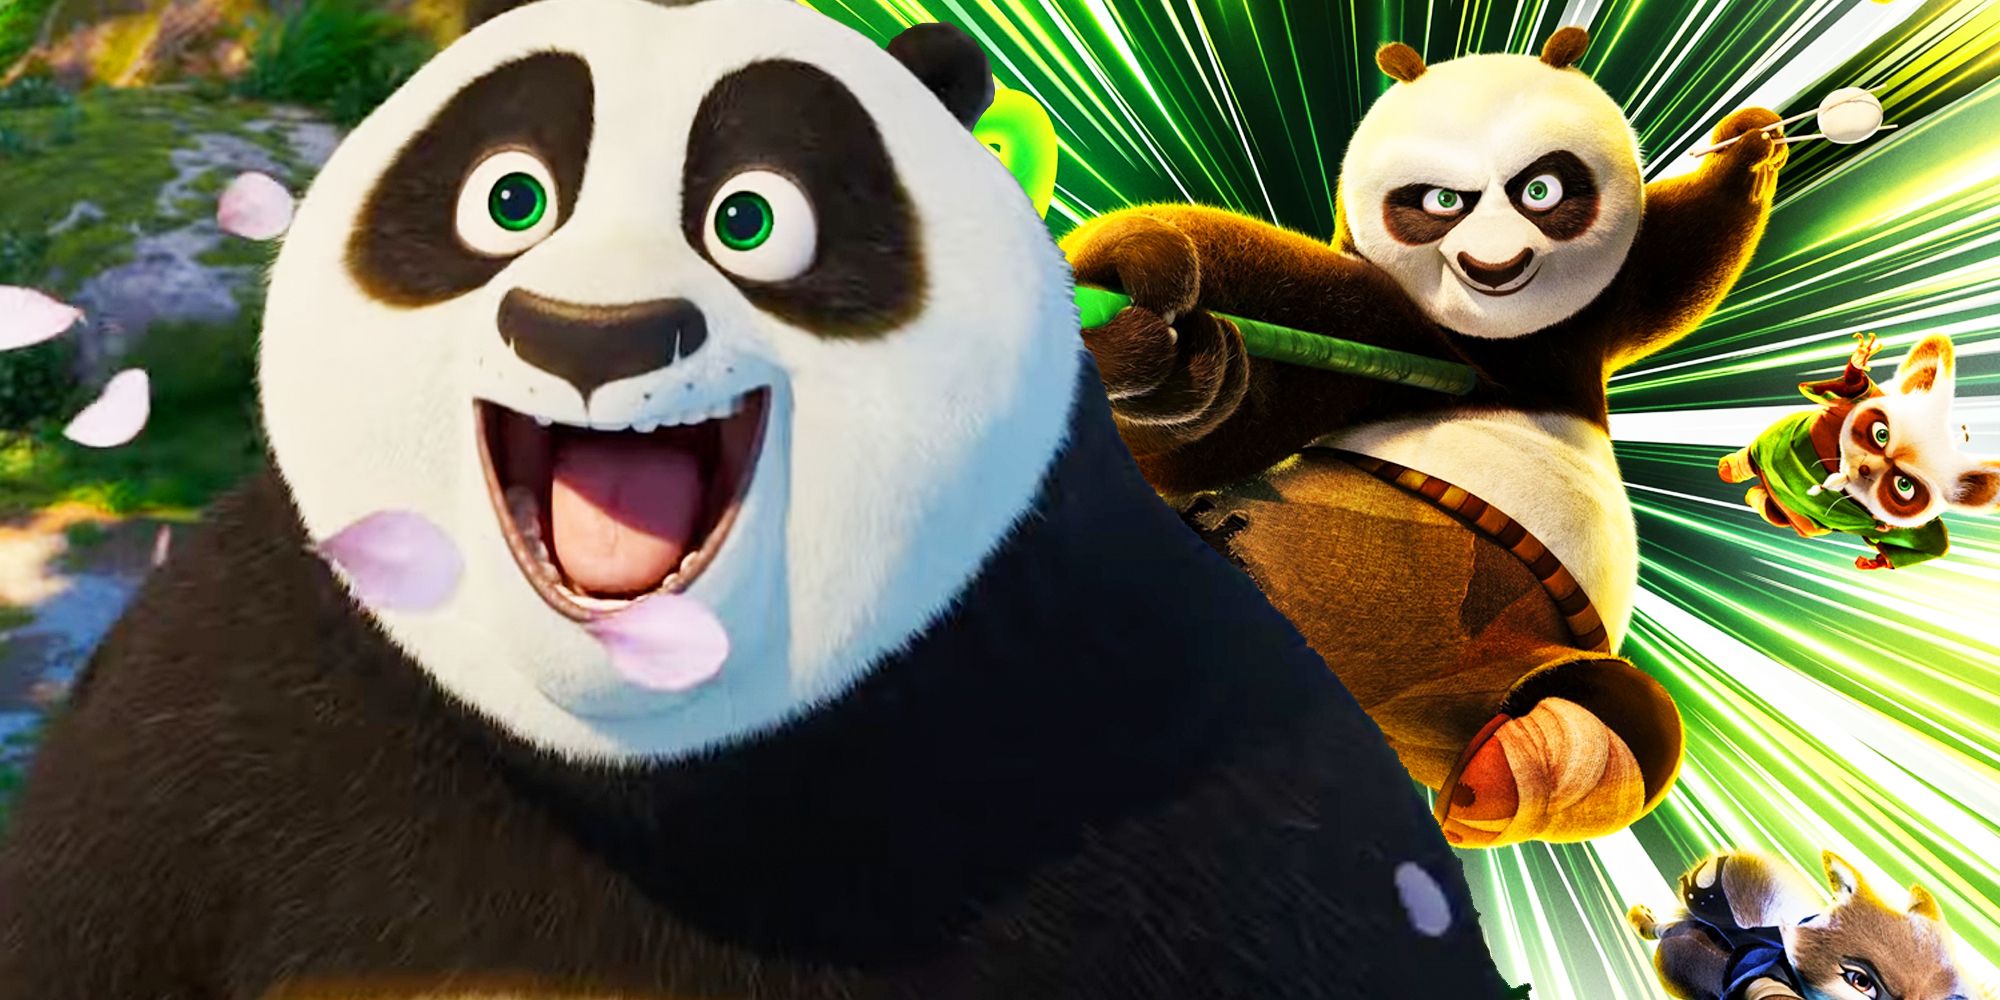 Po and the Kung Fu Panda 4 poster